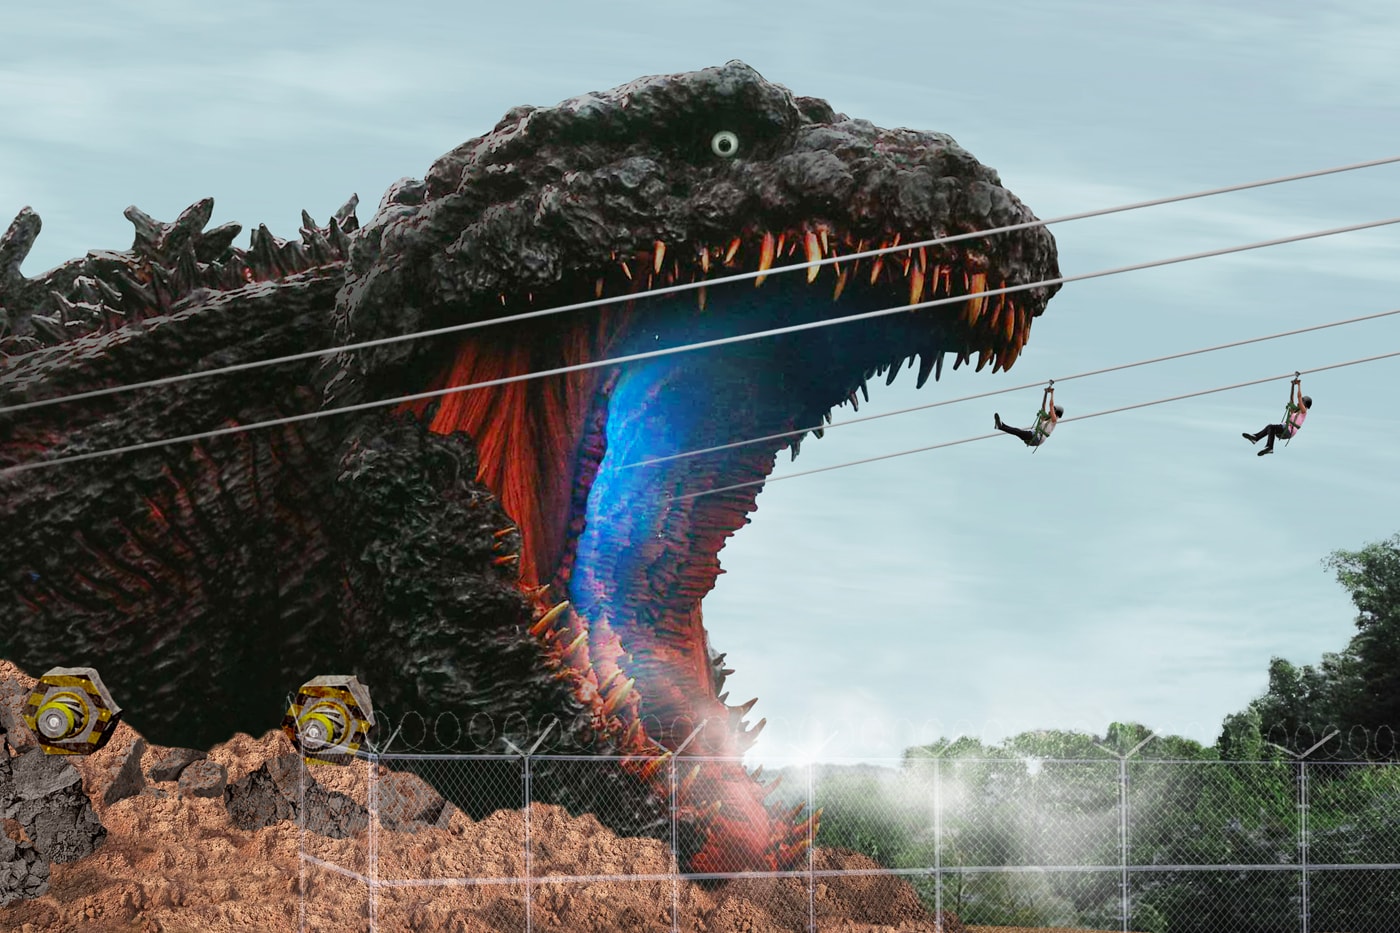 Nijigen no Mori Park Officially Unveils Its Life-Sized Godzilla Awaji Island Japan Kaiju zip line attraction cartoon manga anime pop-culture 